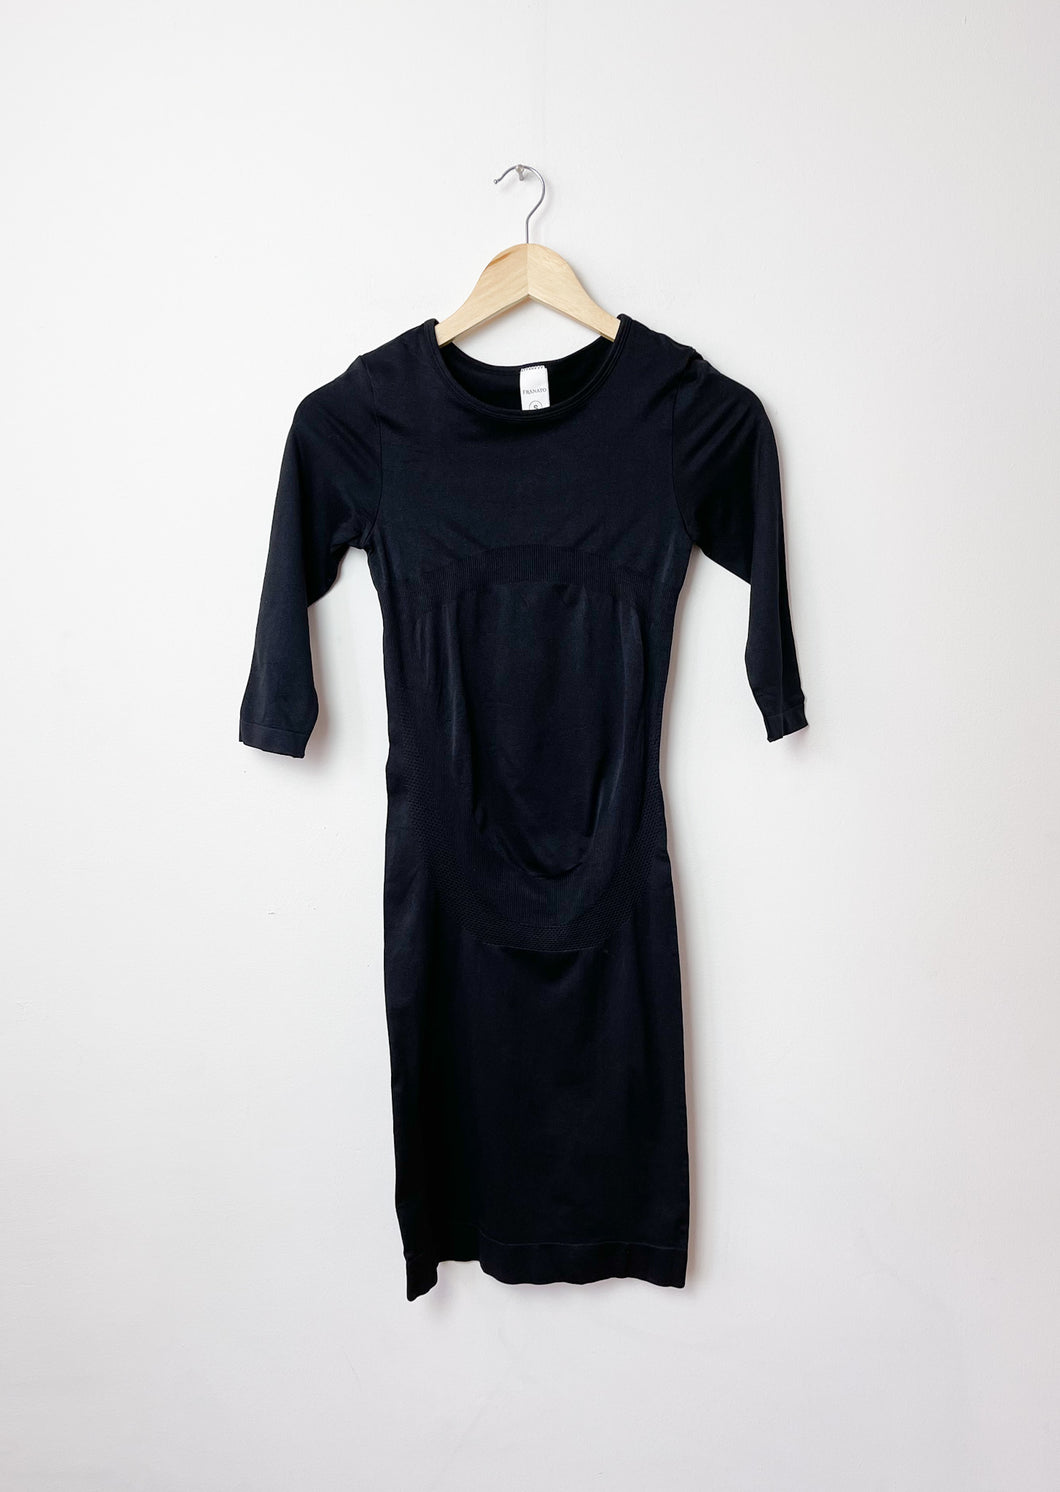 Maternity Black Franato Dress Size Small